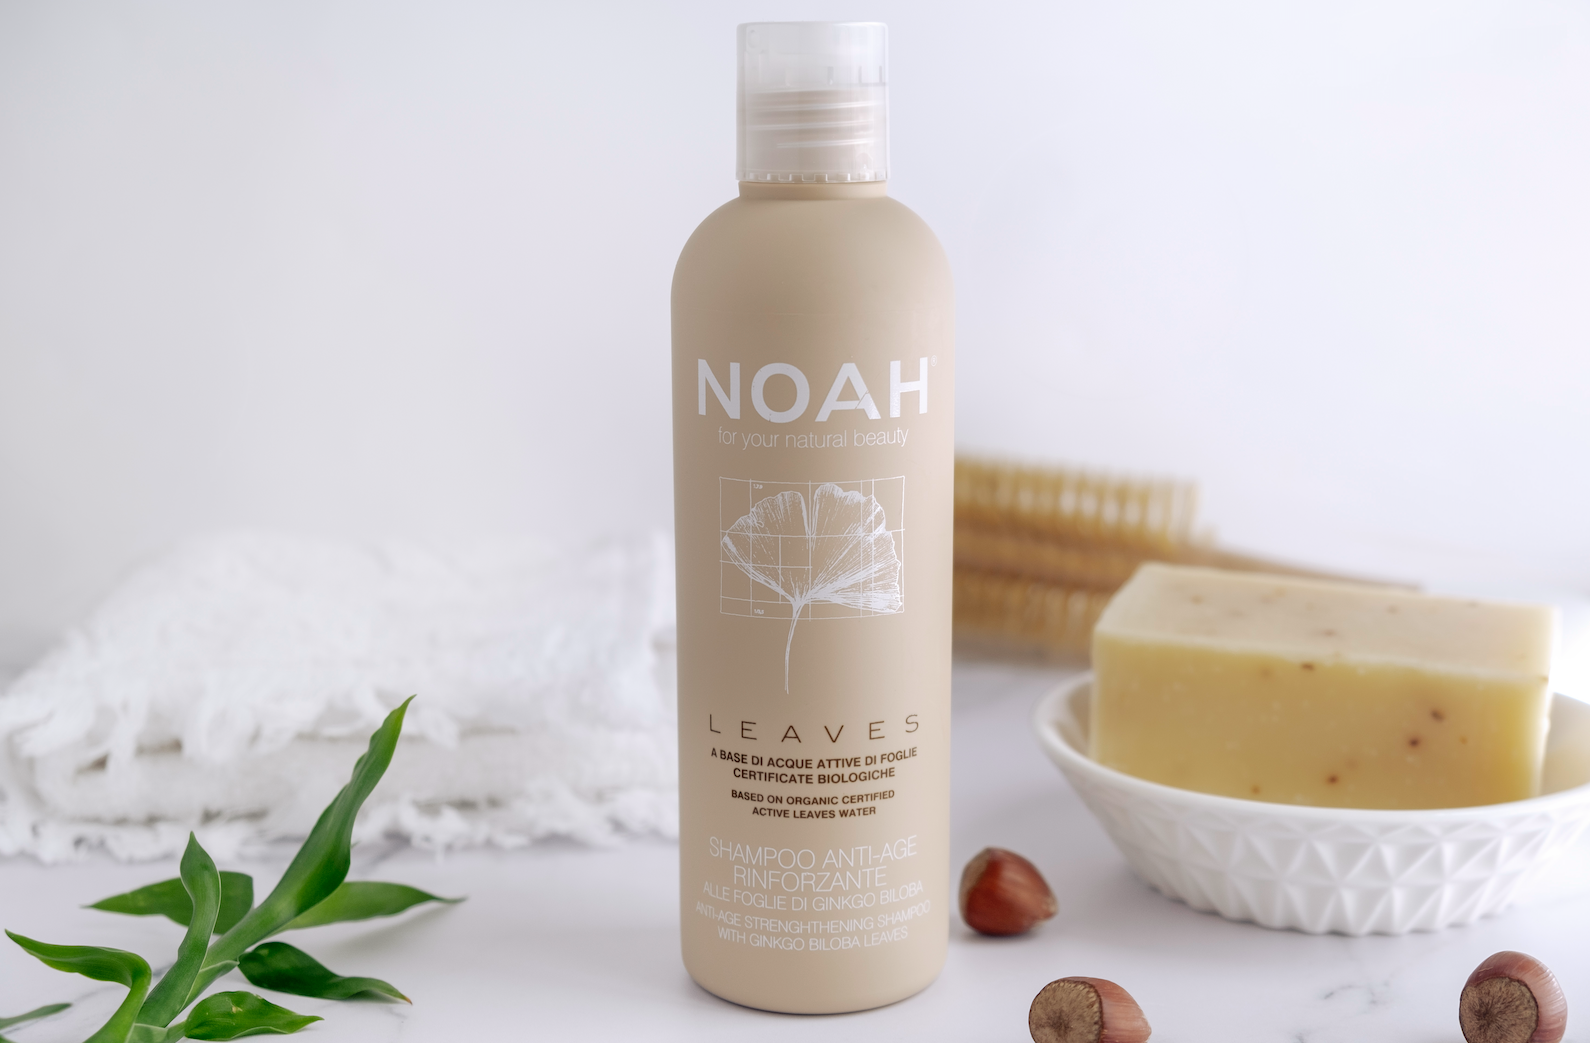 NOAH: Kids Shampoo for Long Hair (Champú niños para cabello largo) - The  Singular Olivia